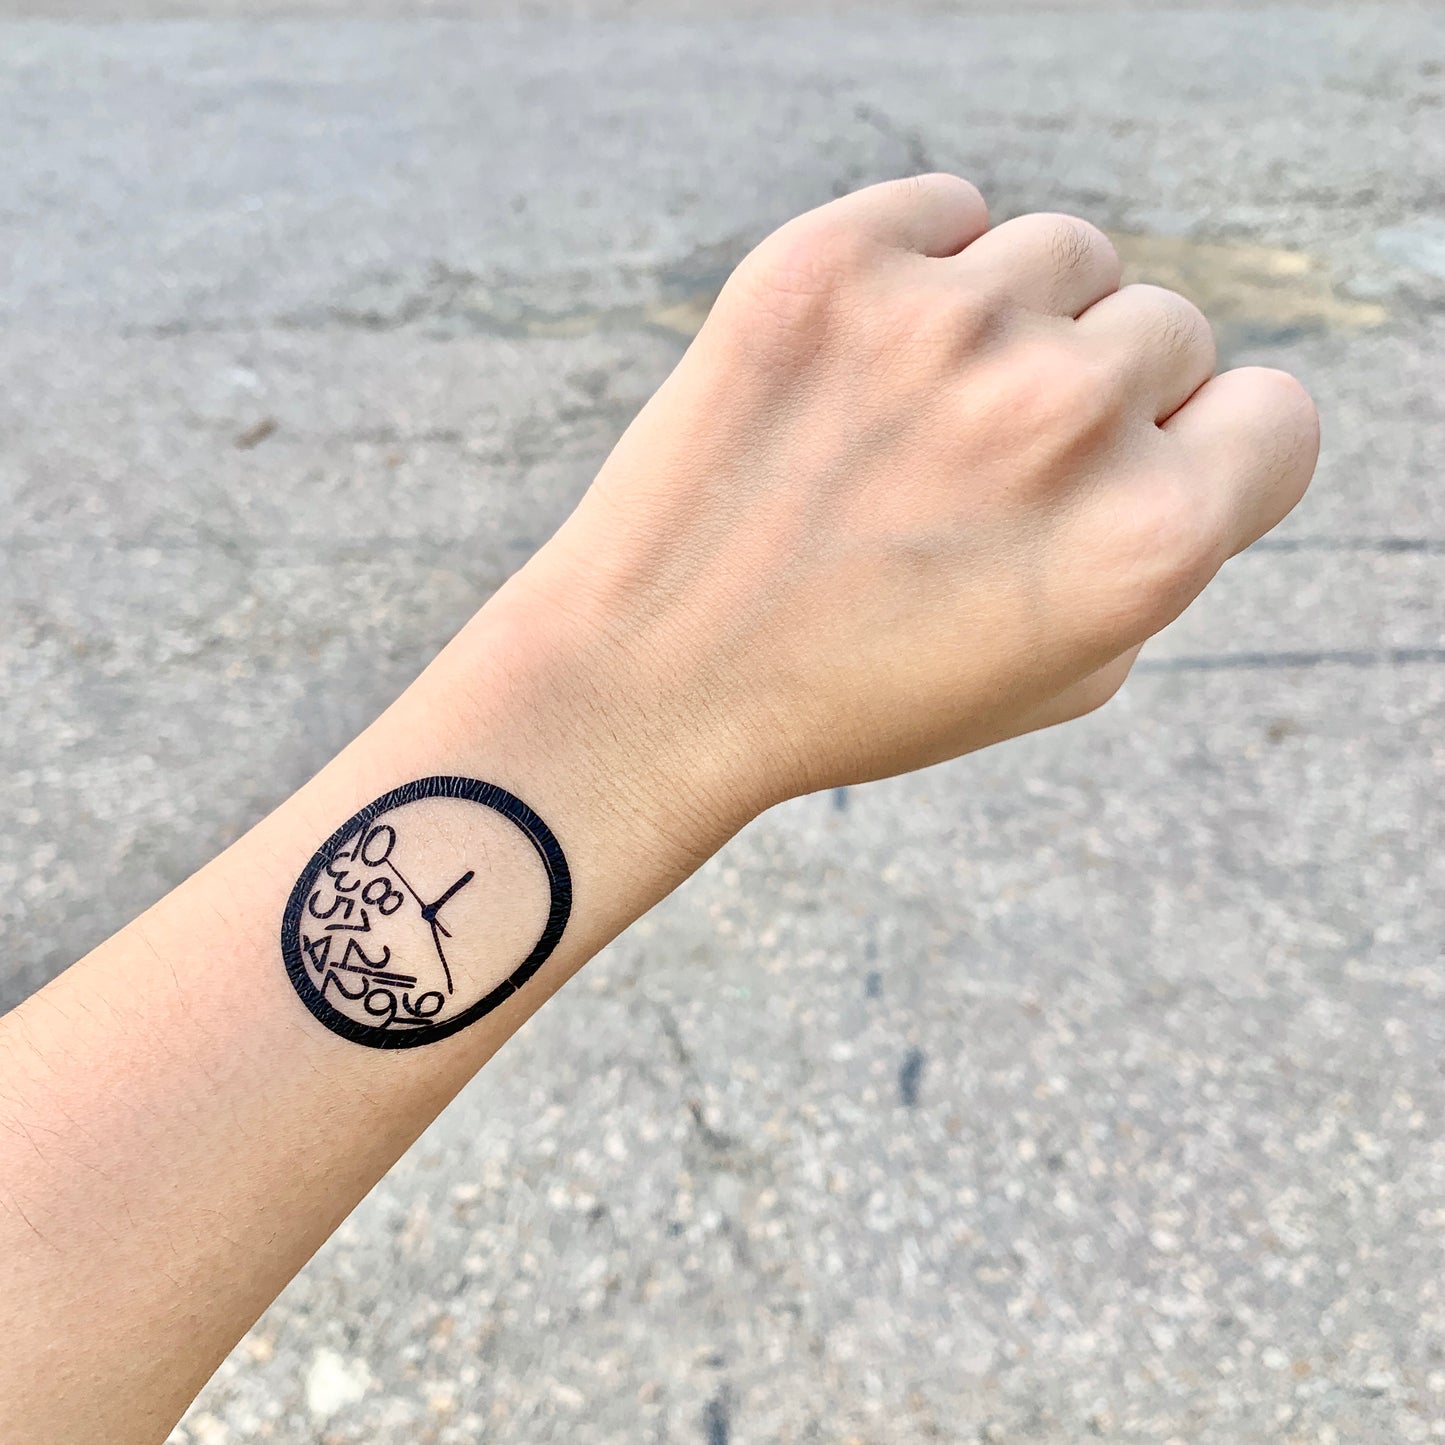 fake small broken clock face illustrative temporary tattoo sticker design idea on wrist